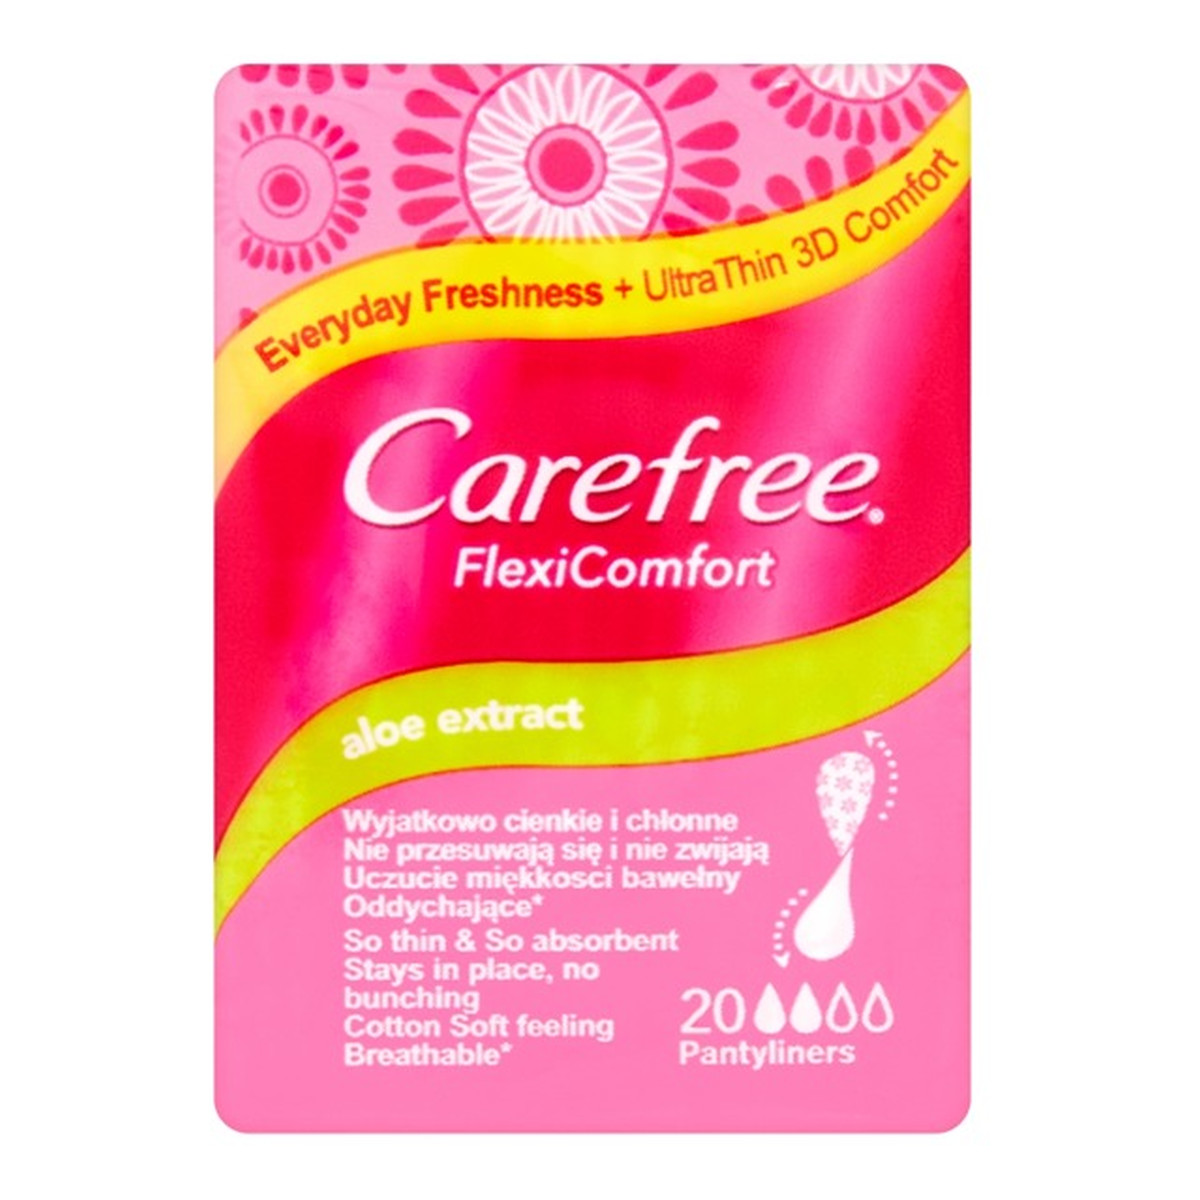 Carefree Flexi Comfort Aloe Extract Wkładki higieniczne 20szt